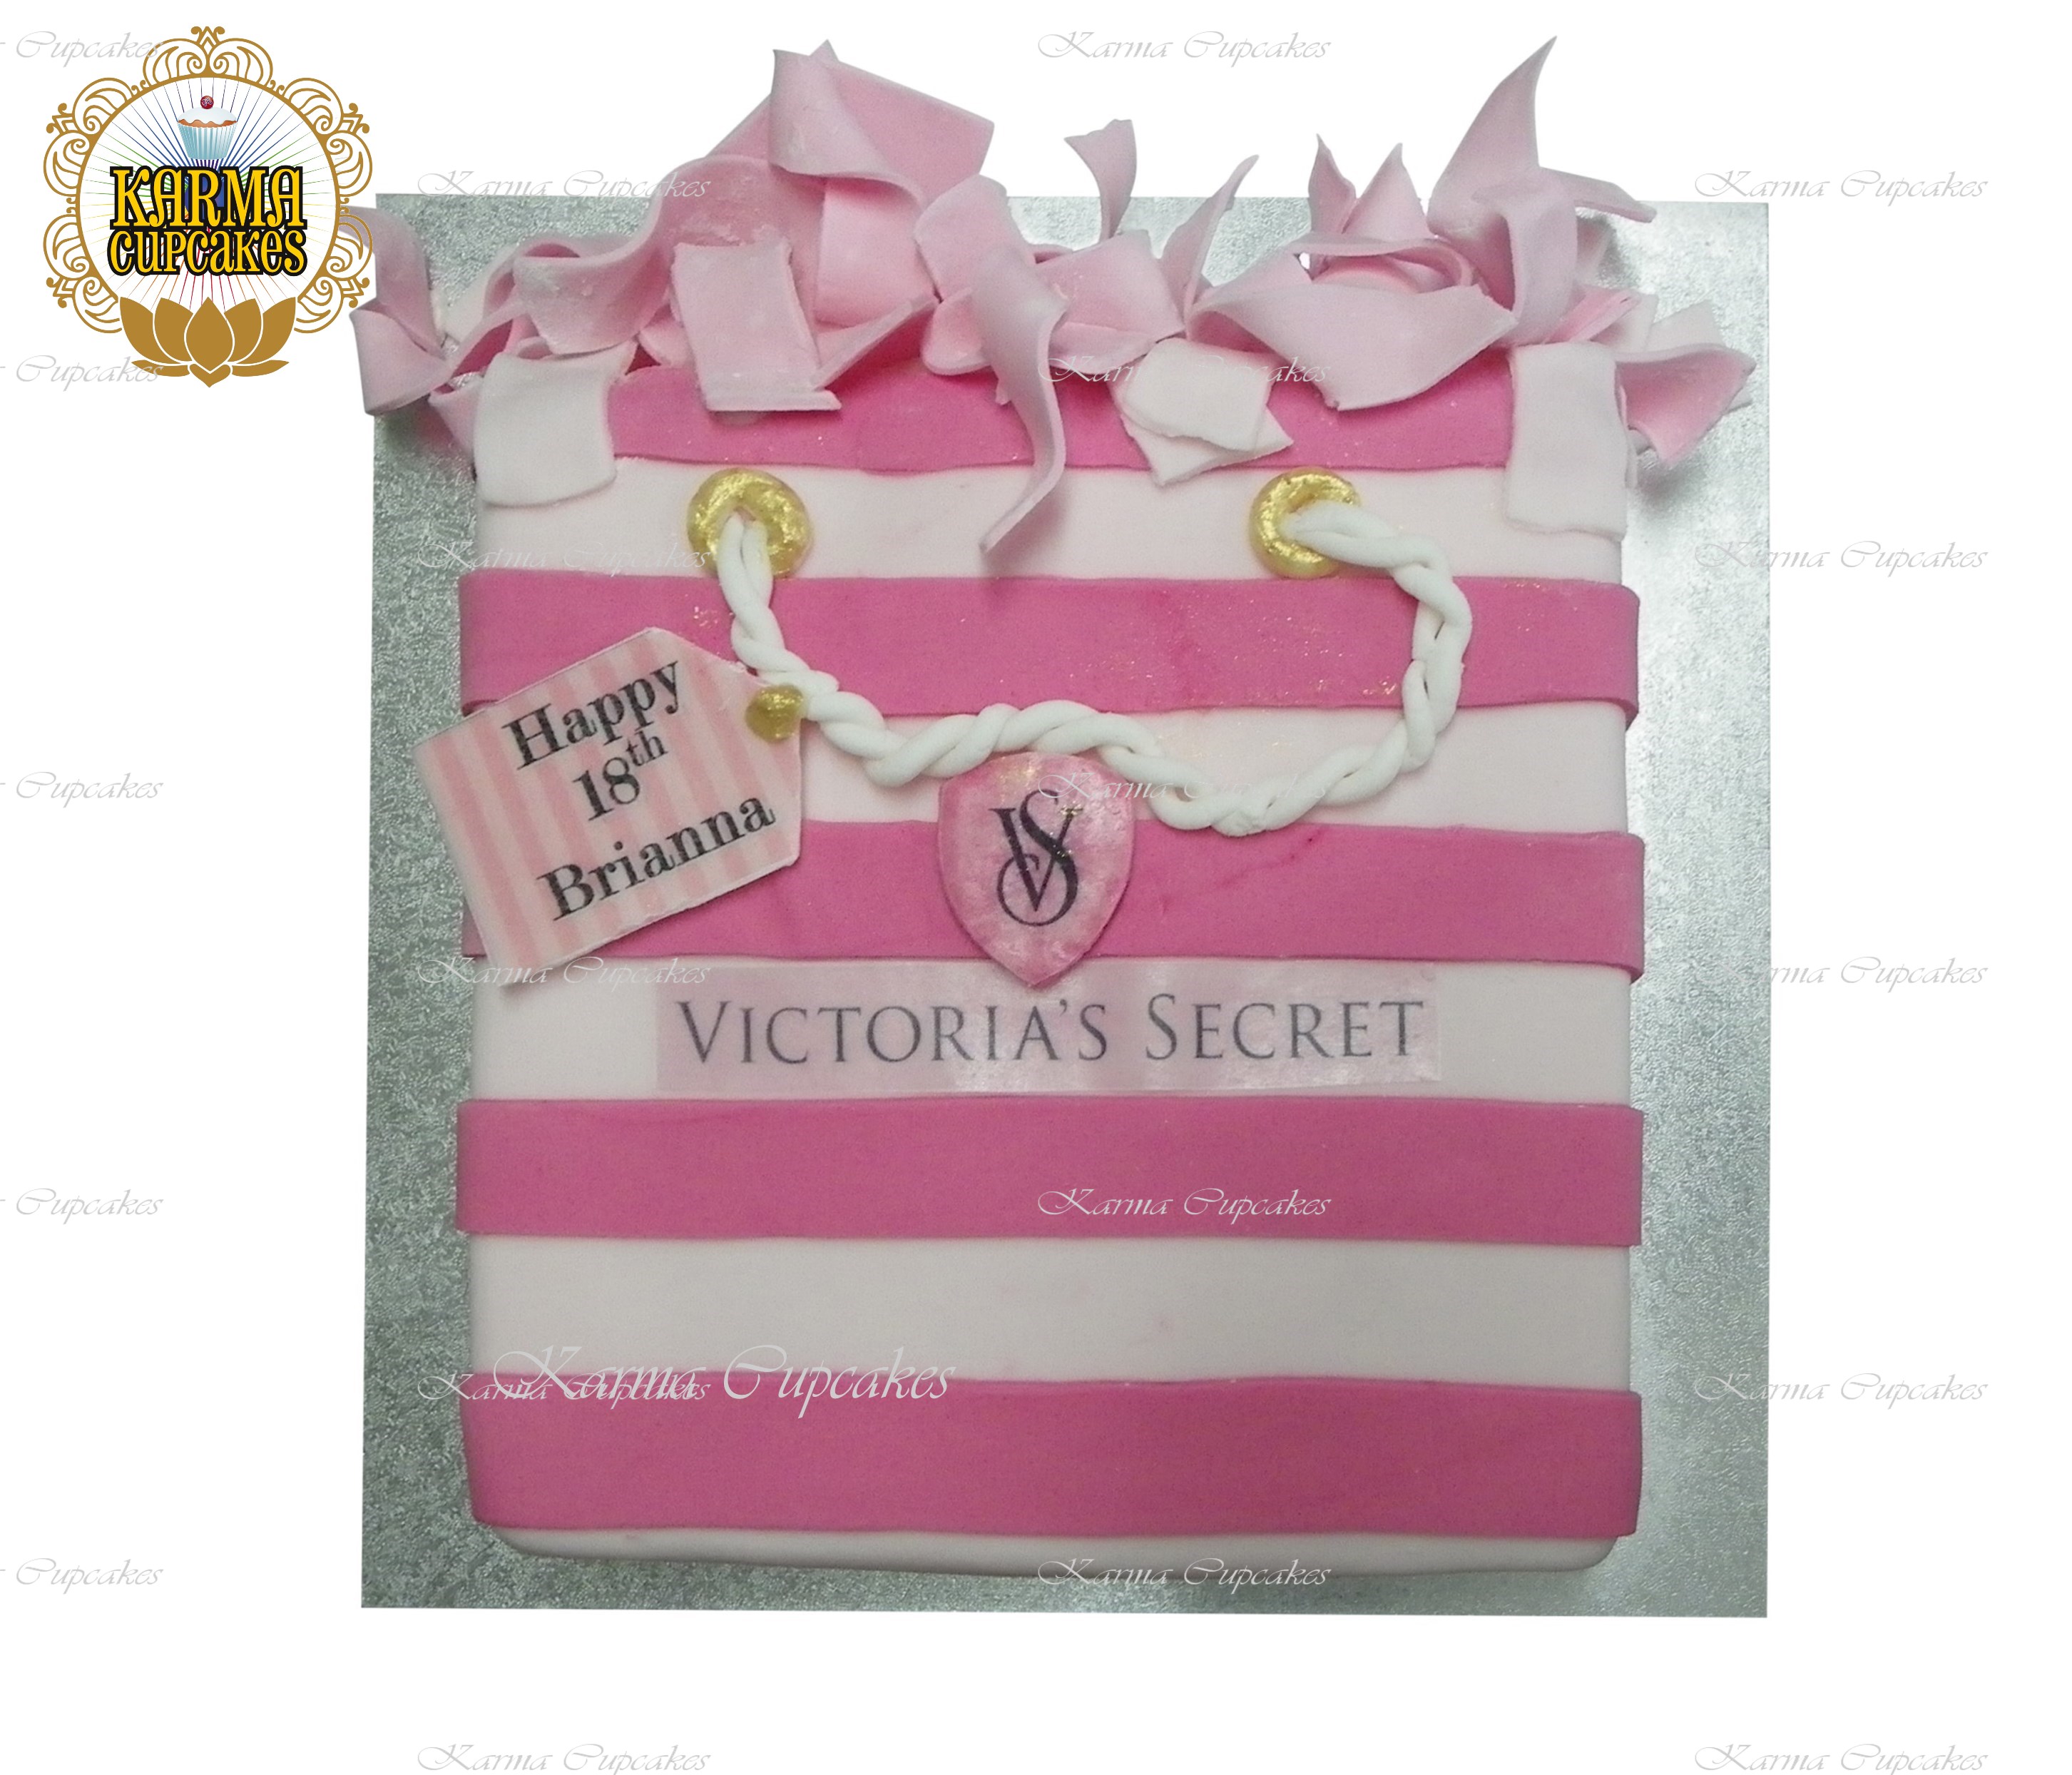 Victoria's Secret Handbag Cake with Edible Message